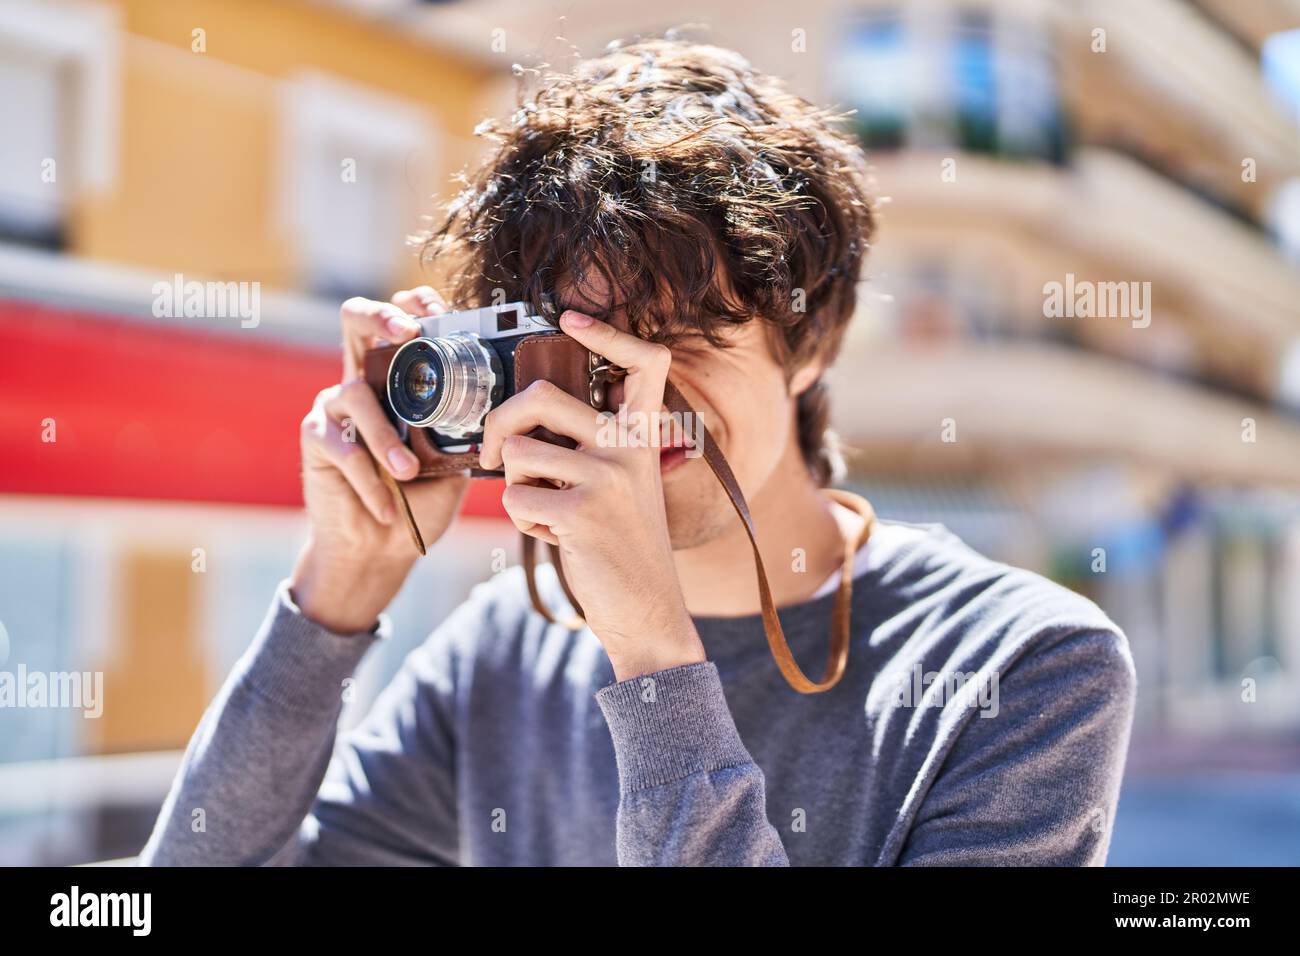 Young hispanic man smiling confident using vintage camera at street Stock Photo